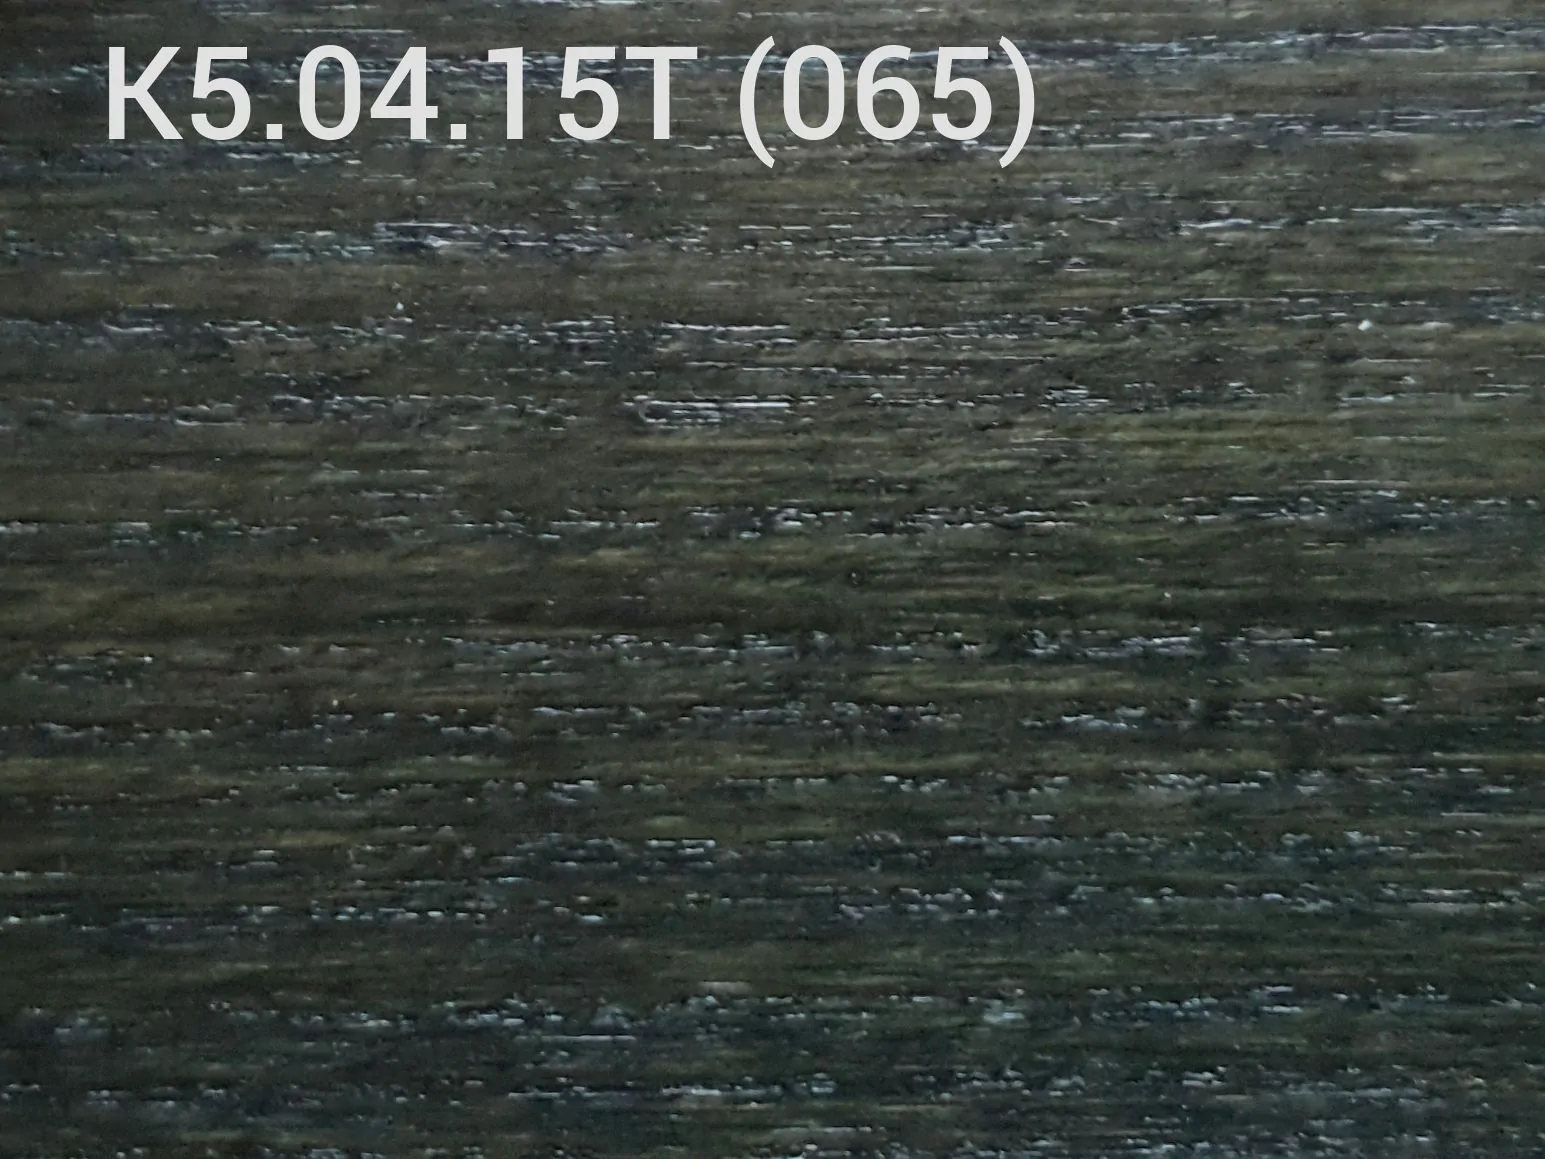 K5.04.15T (065 olive green)